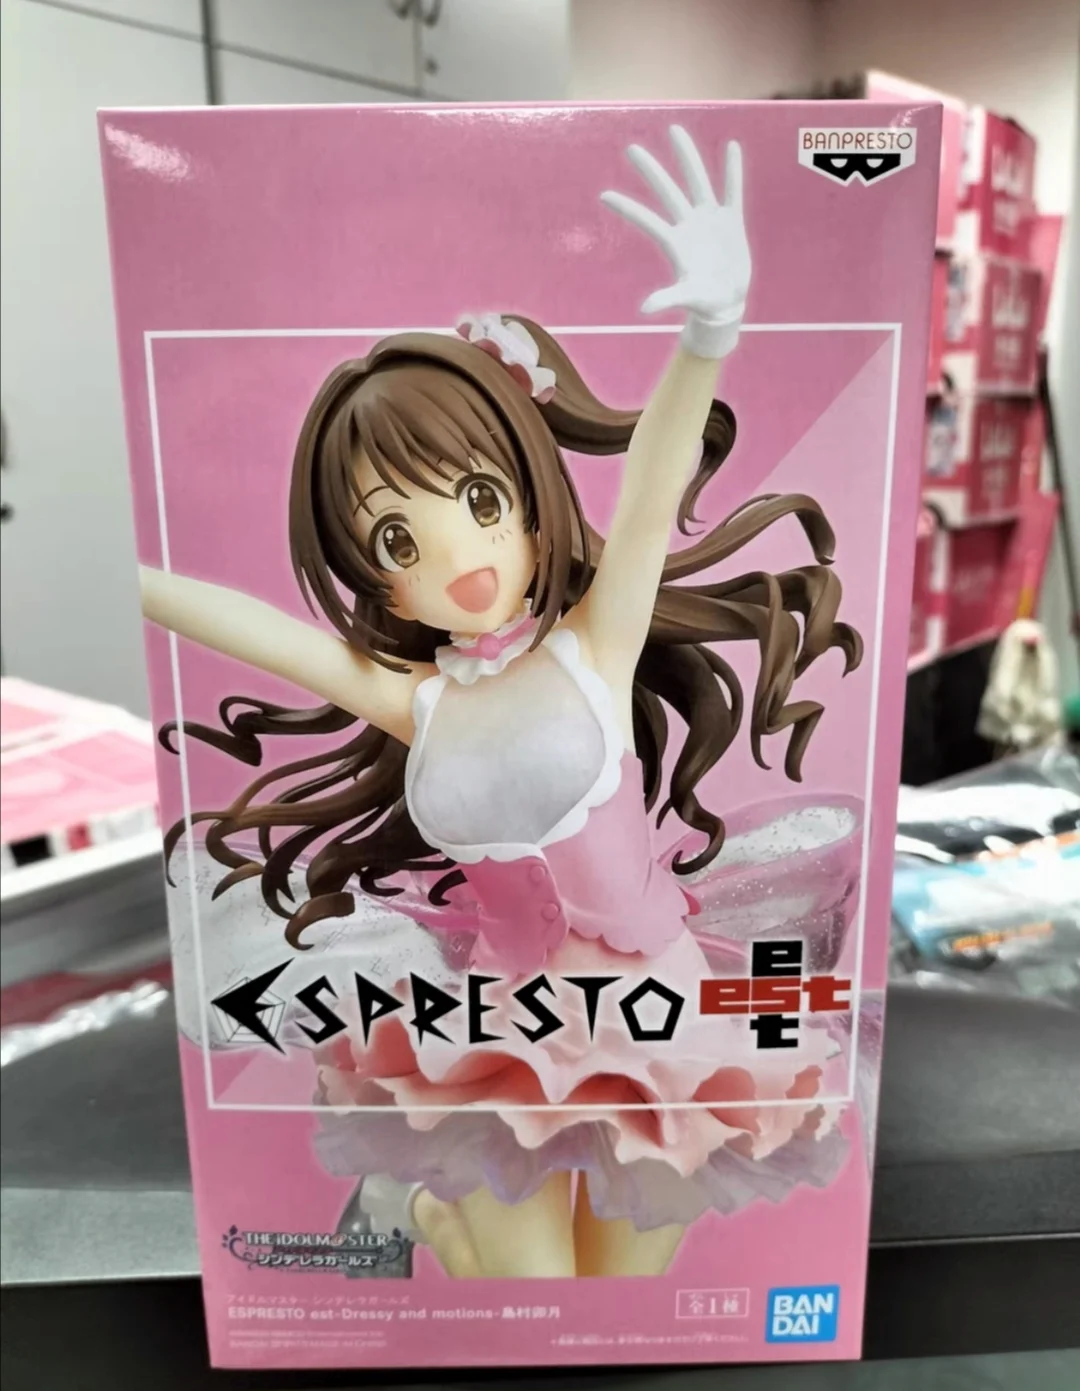 

In Stock 100% Original Banpresto ESPRESTO est Shimamura Uzuki PVC Action Figure Boxed Model Collection Model Toys for Boys Gift